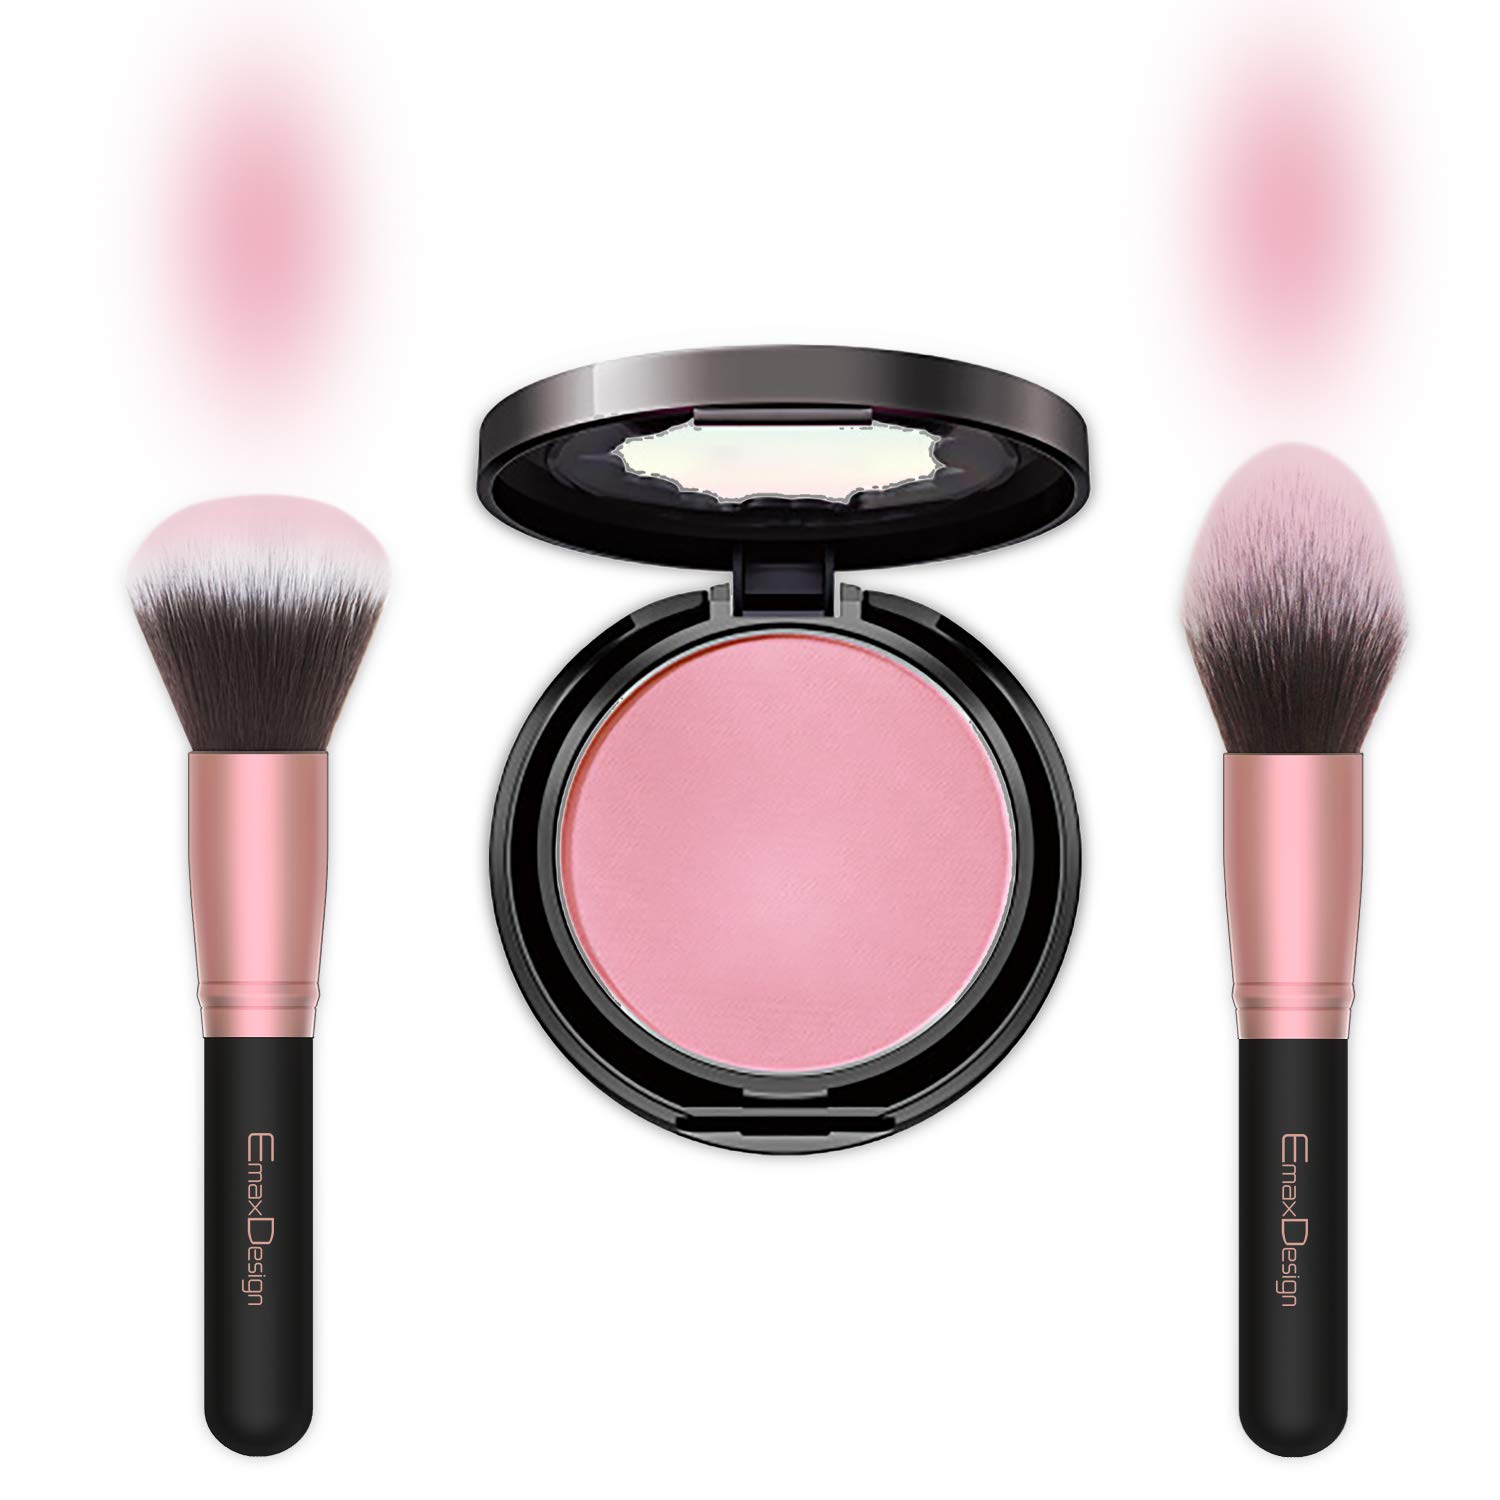 EmaxDesign Makeup Brushes,18 Pcs Professional Makeup Brush Set Premium Synthetic Brush Foundation Blush Concealer Blending Powder Liquid Cream Face Eyeshadow Brushes Kit (Rose Golden)